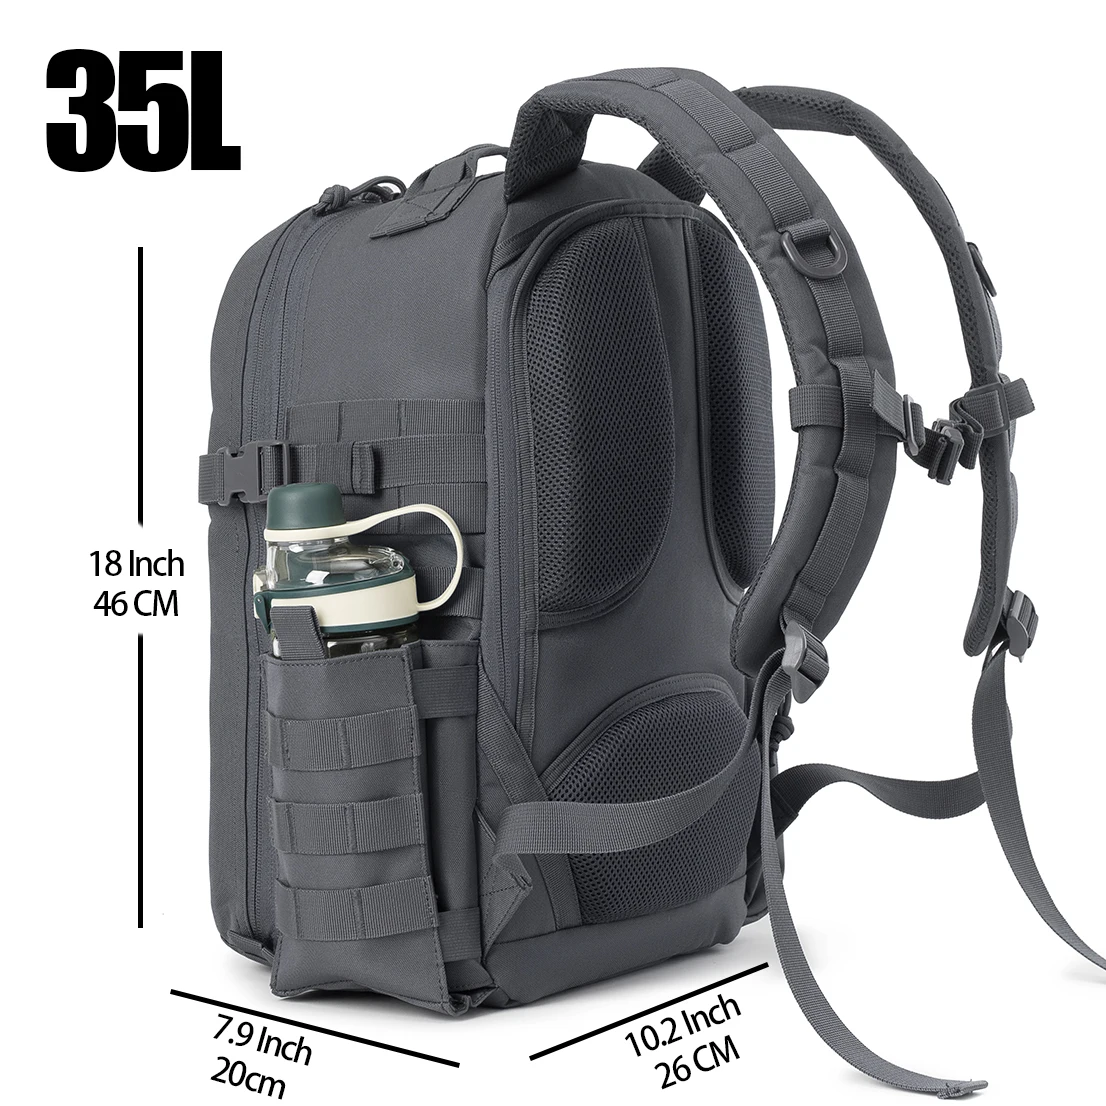 QT&QY 35L Tactical Backpack For Men Molle 3 Day survival Backpack School Hunting Camping Hiking Rucksack Survival Bug Out Bag